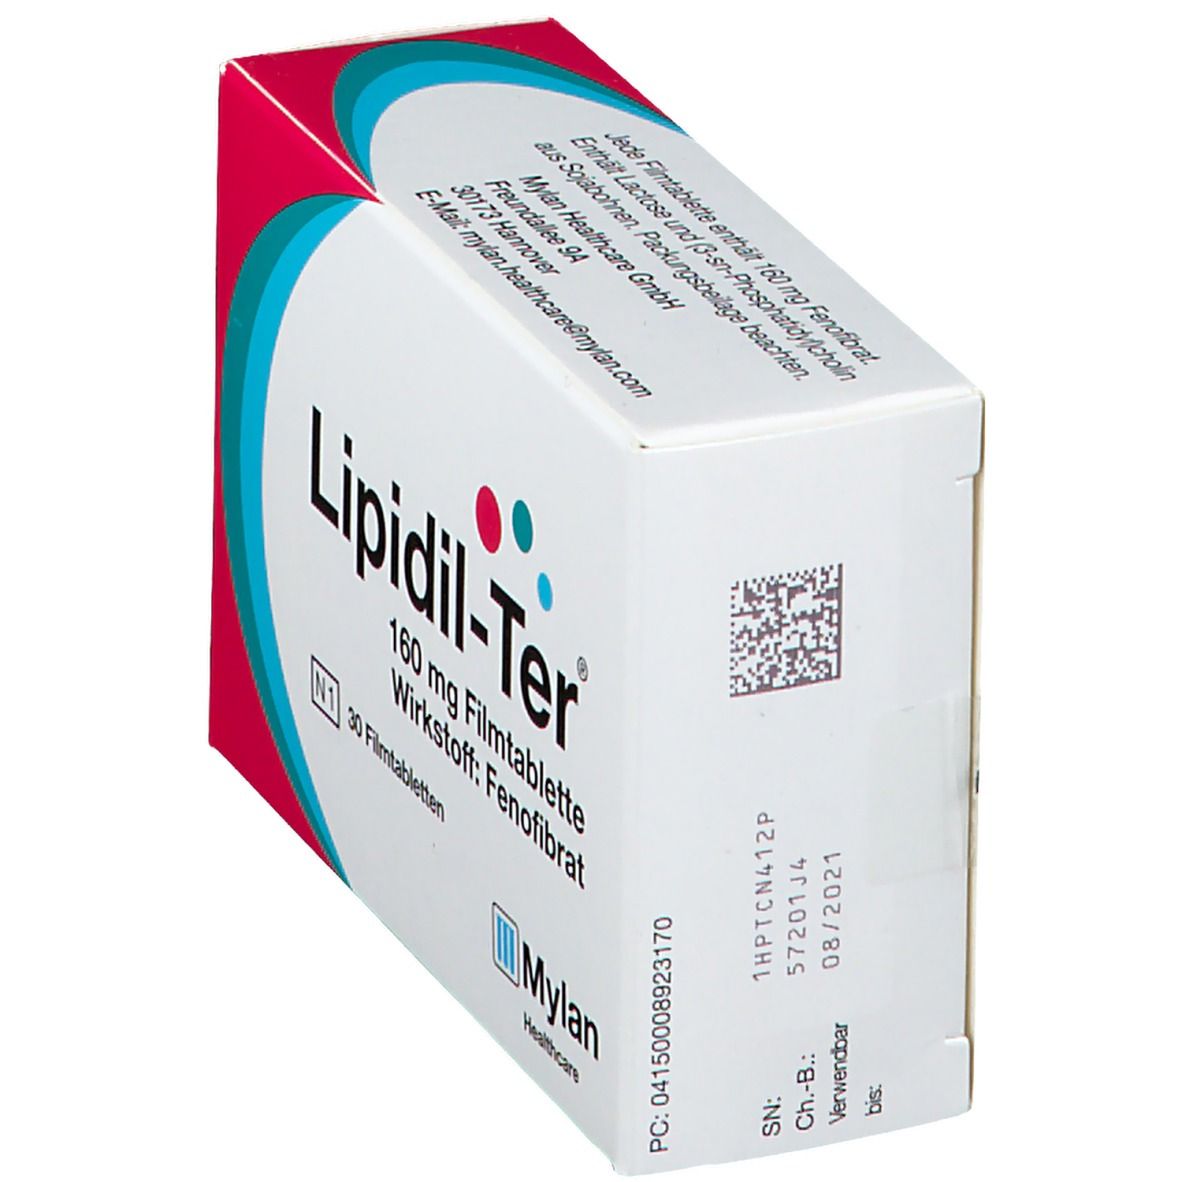 Lipidil-Ter® 160 mg